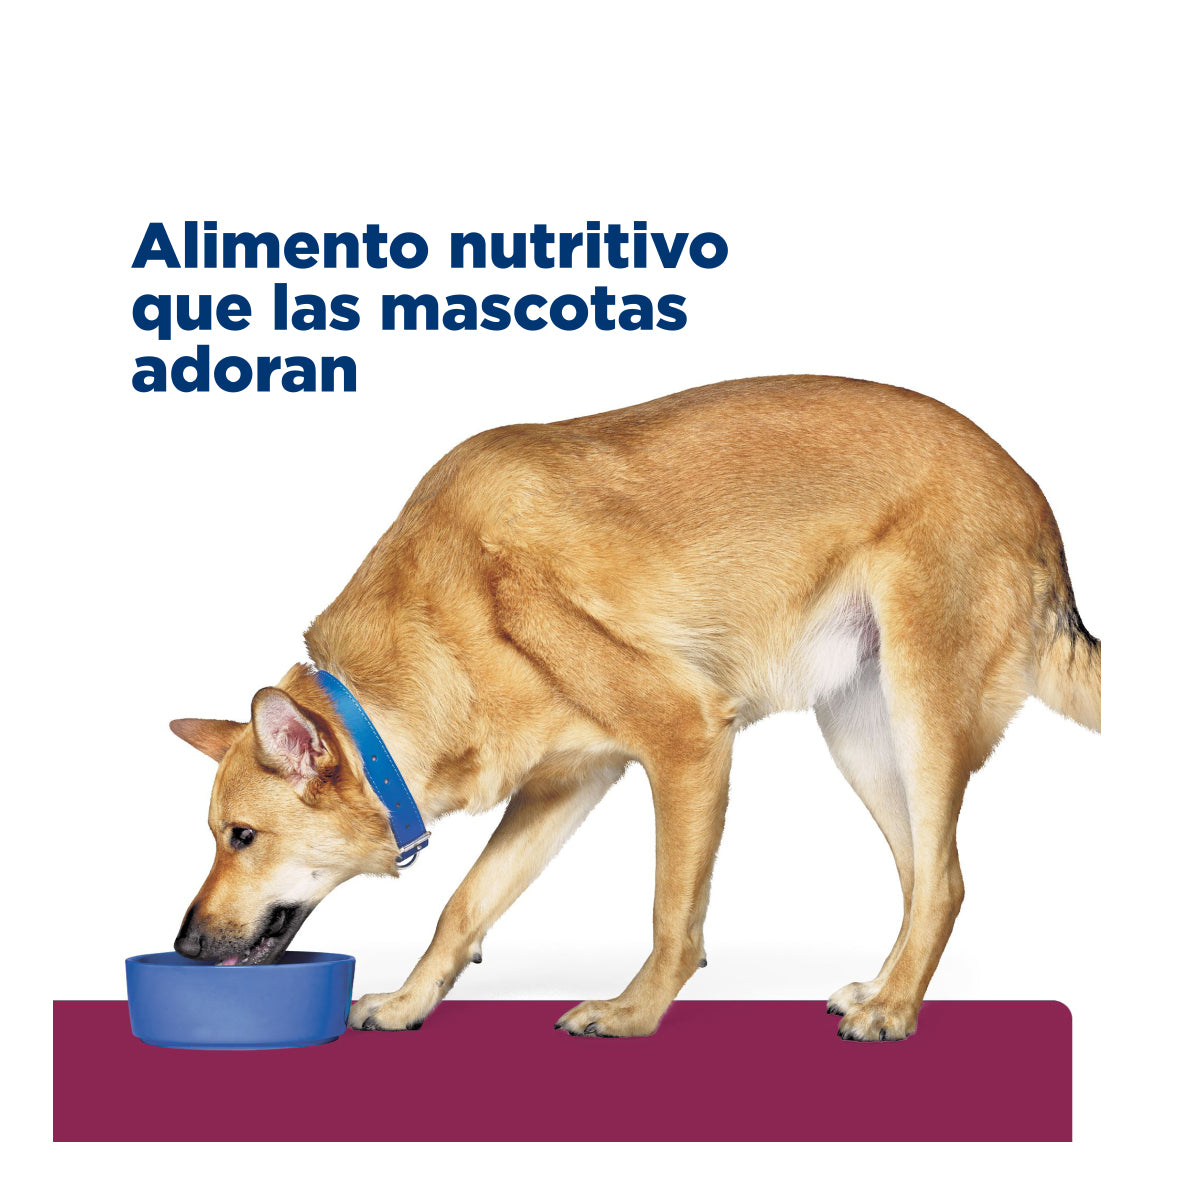 Alimento Húmedo en Lata para Perro Adulto i/d Pavo Hill's Prescription Diet 370 g (Individual)